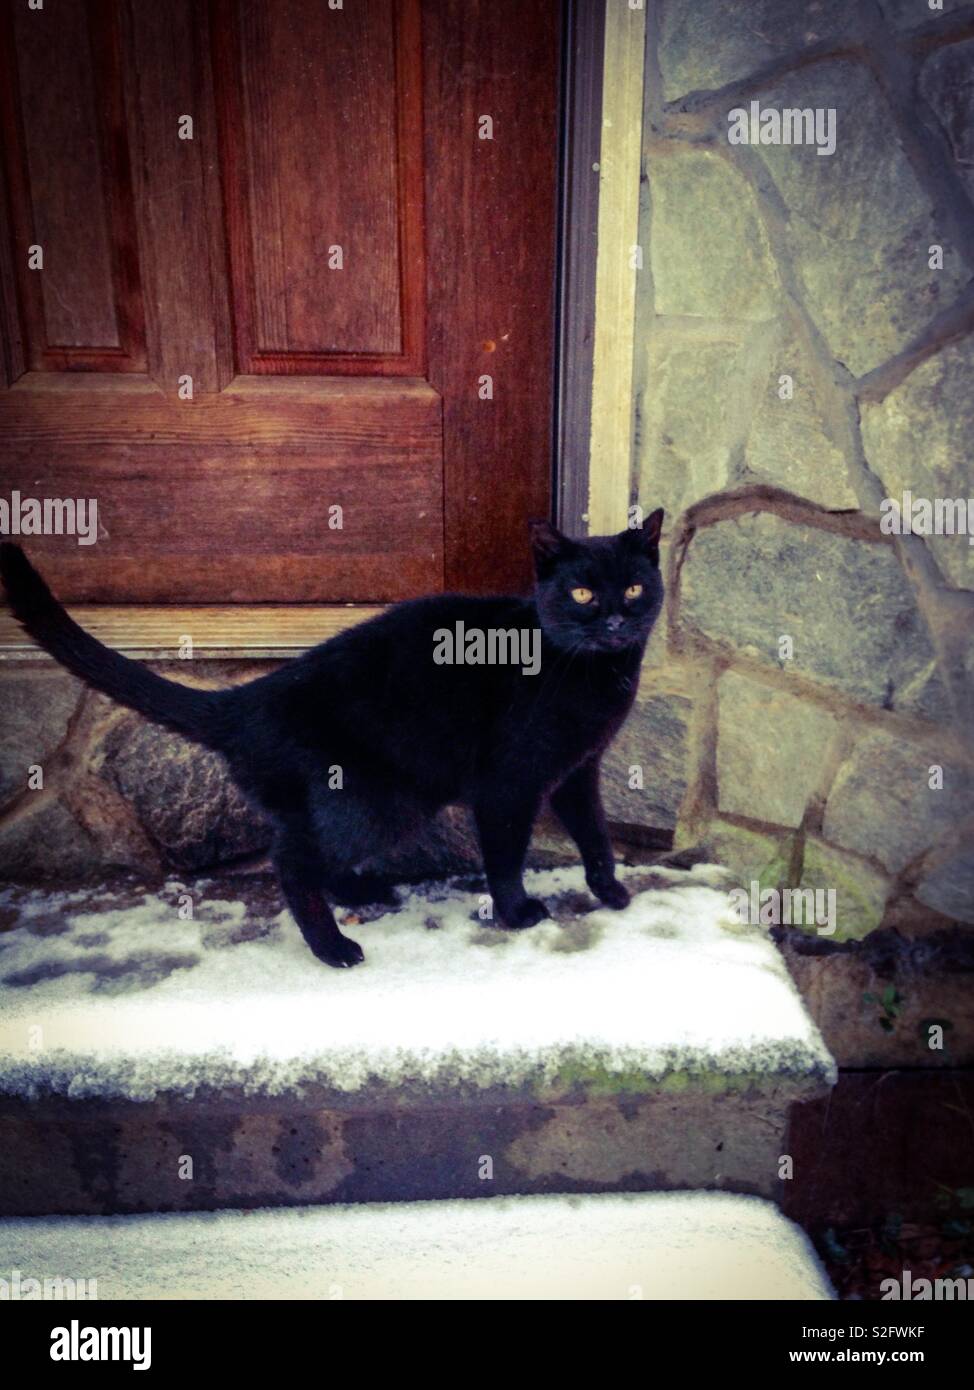 Black Tom cat at snowy back door Stock Photo